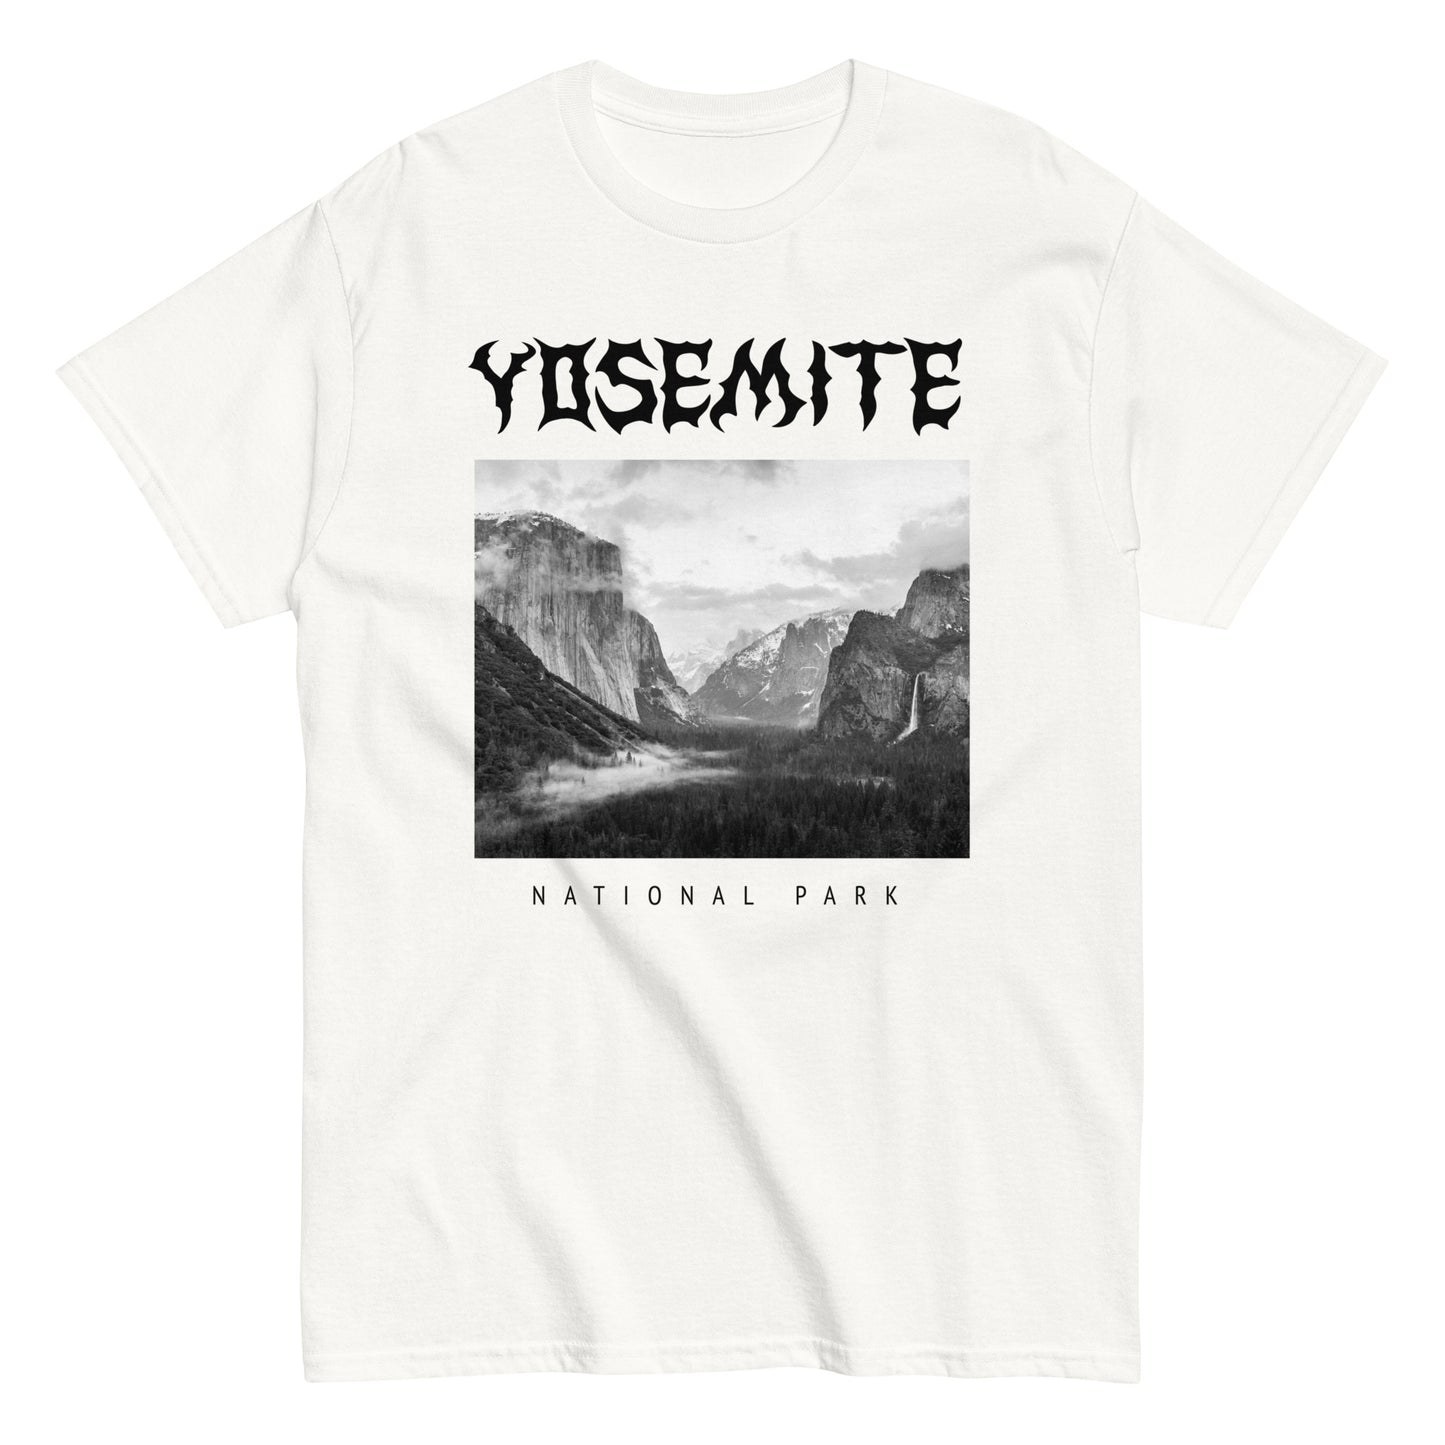 Yosemite National Park Death Metal Style White T-Shirt